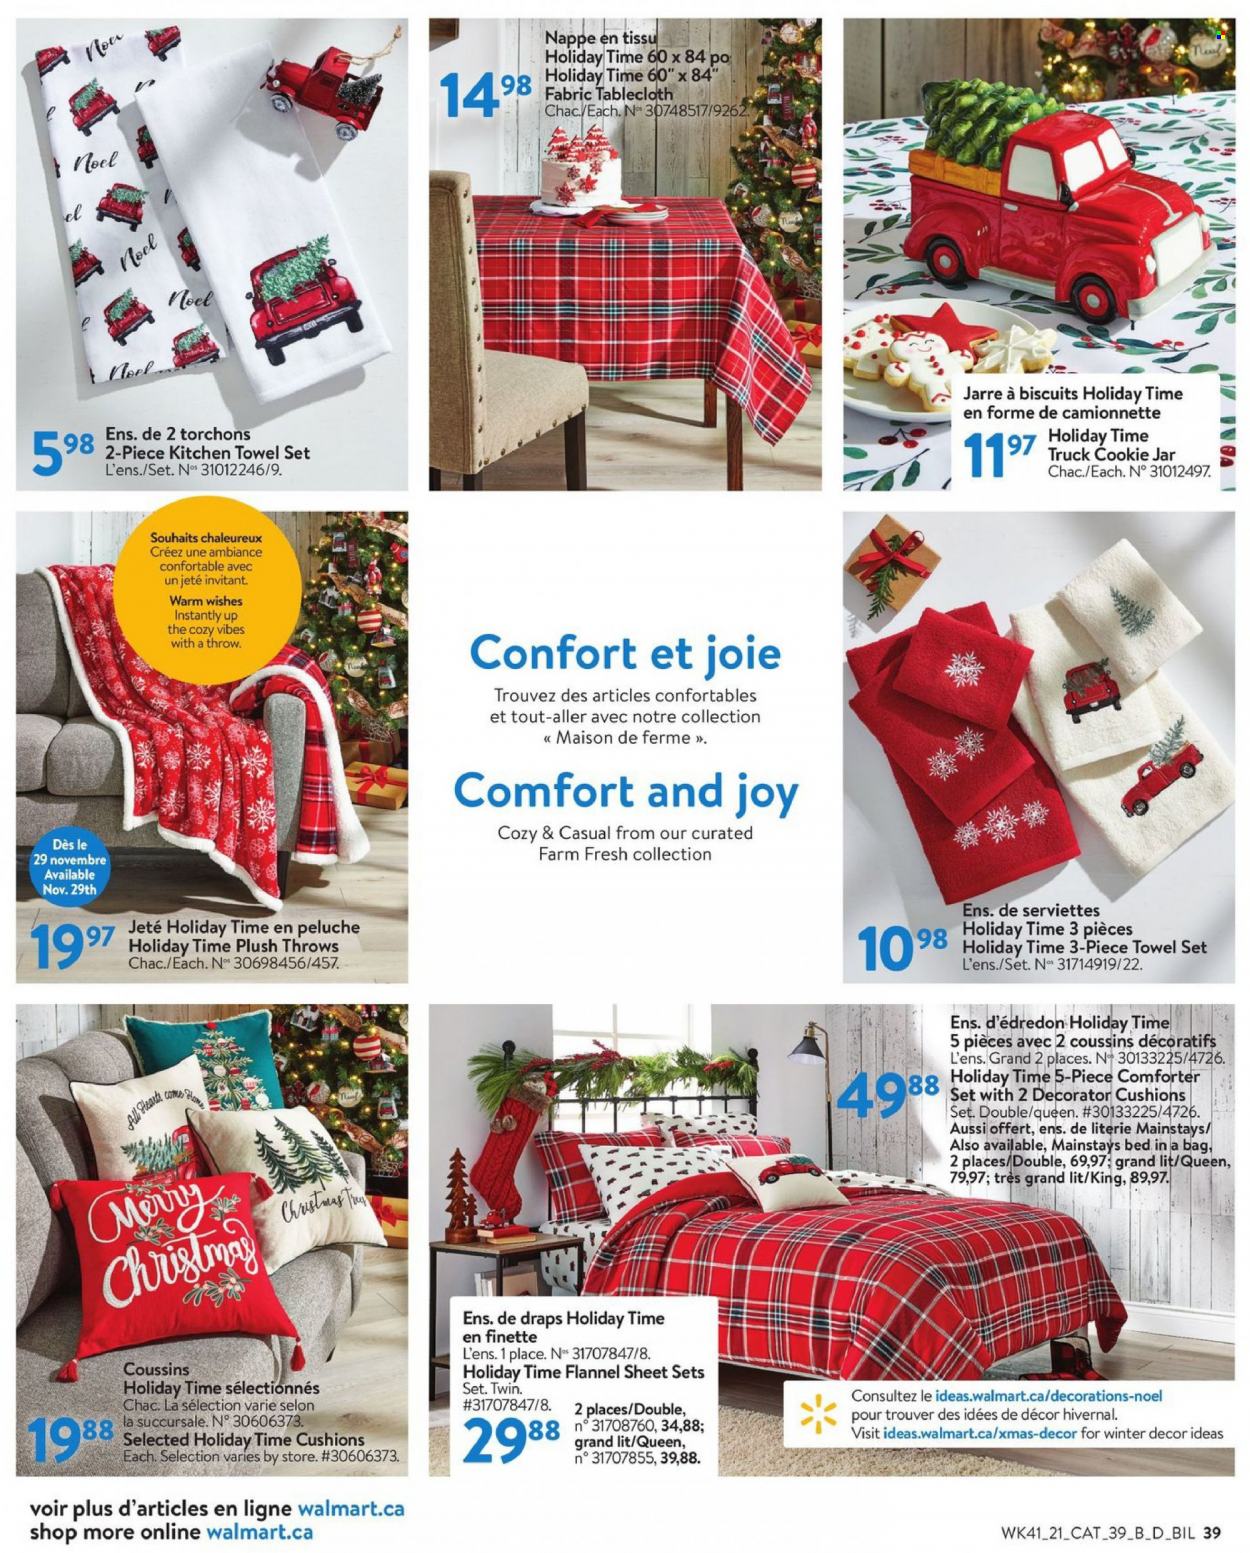 thumbnail - Walmart Flyer - November 04, 2021 - December 01, 2021 - Sales products - biscuit, kitchen towels, Joy, jar, cookie jar, tablecloth, cushion, comforter, bed, Joie. Page 40.